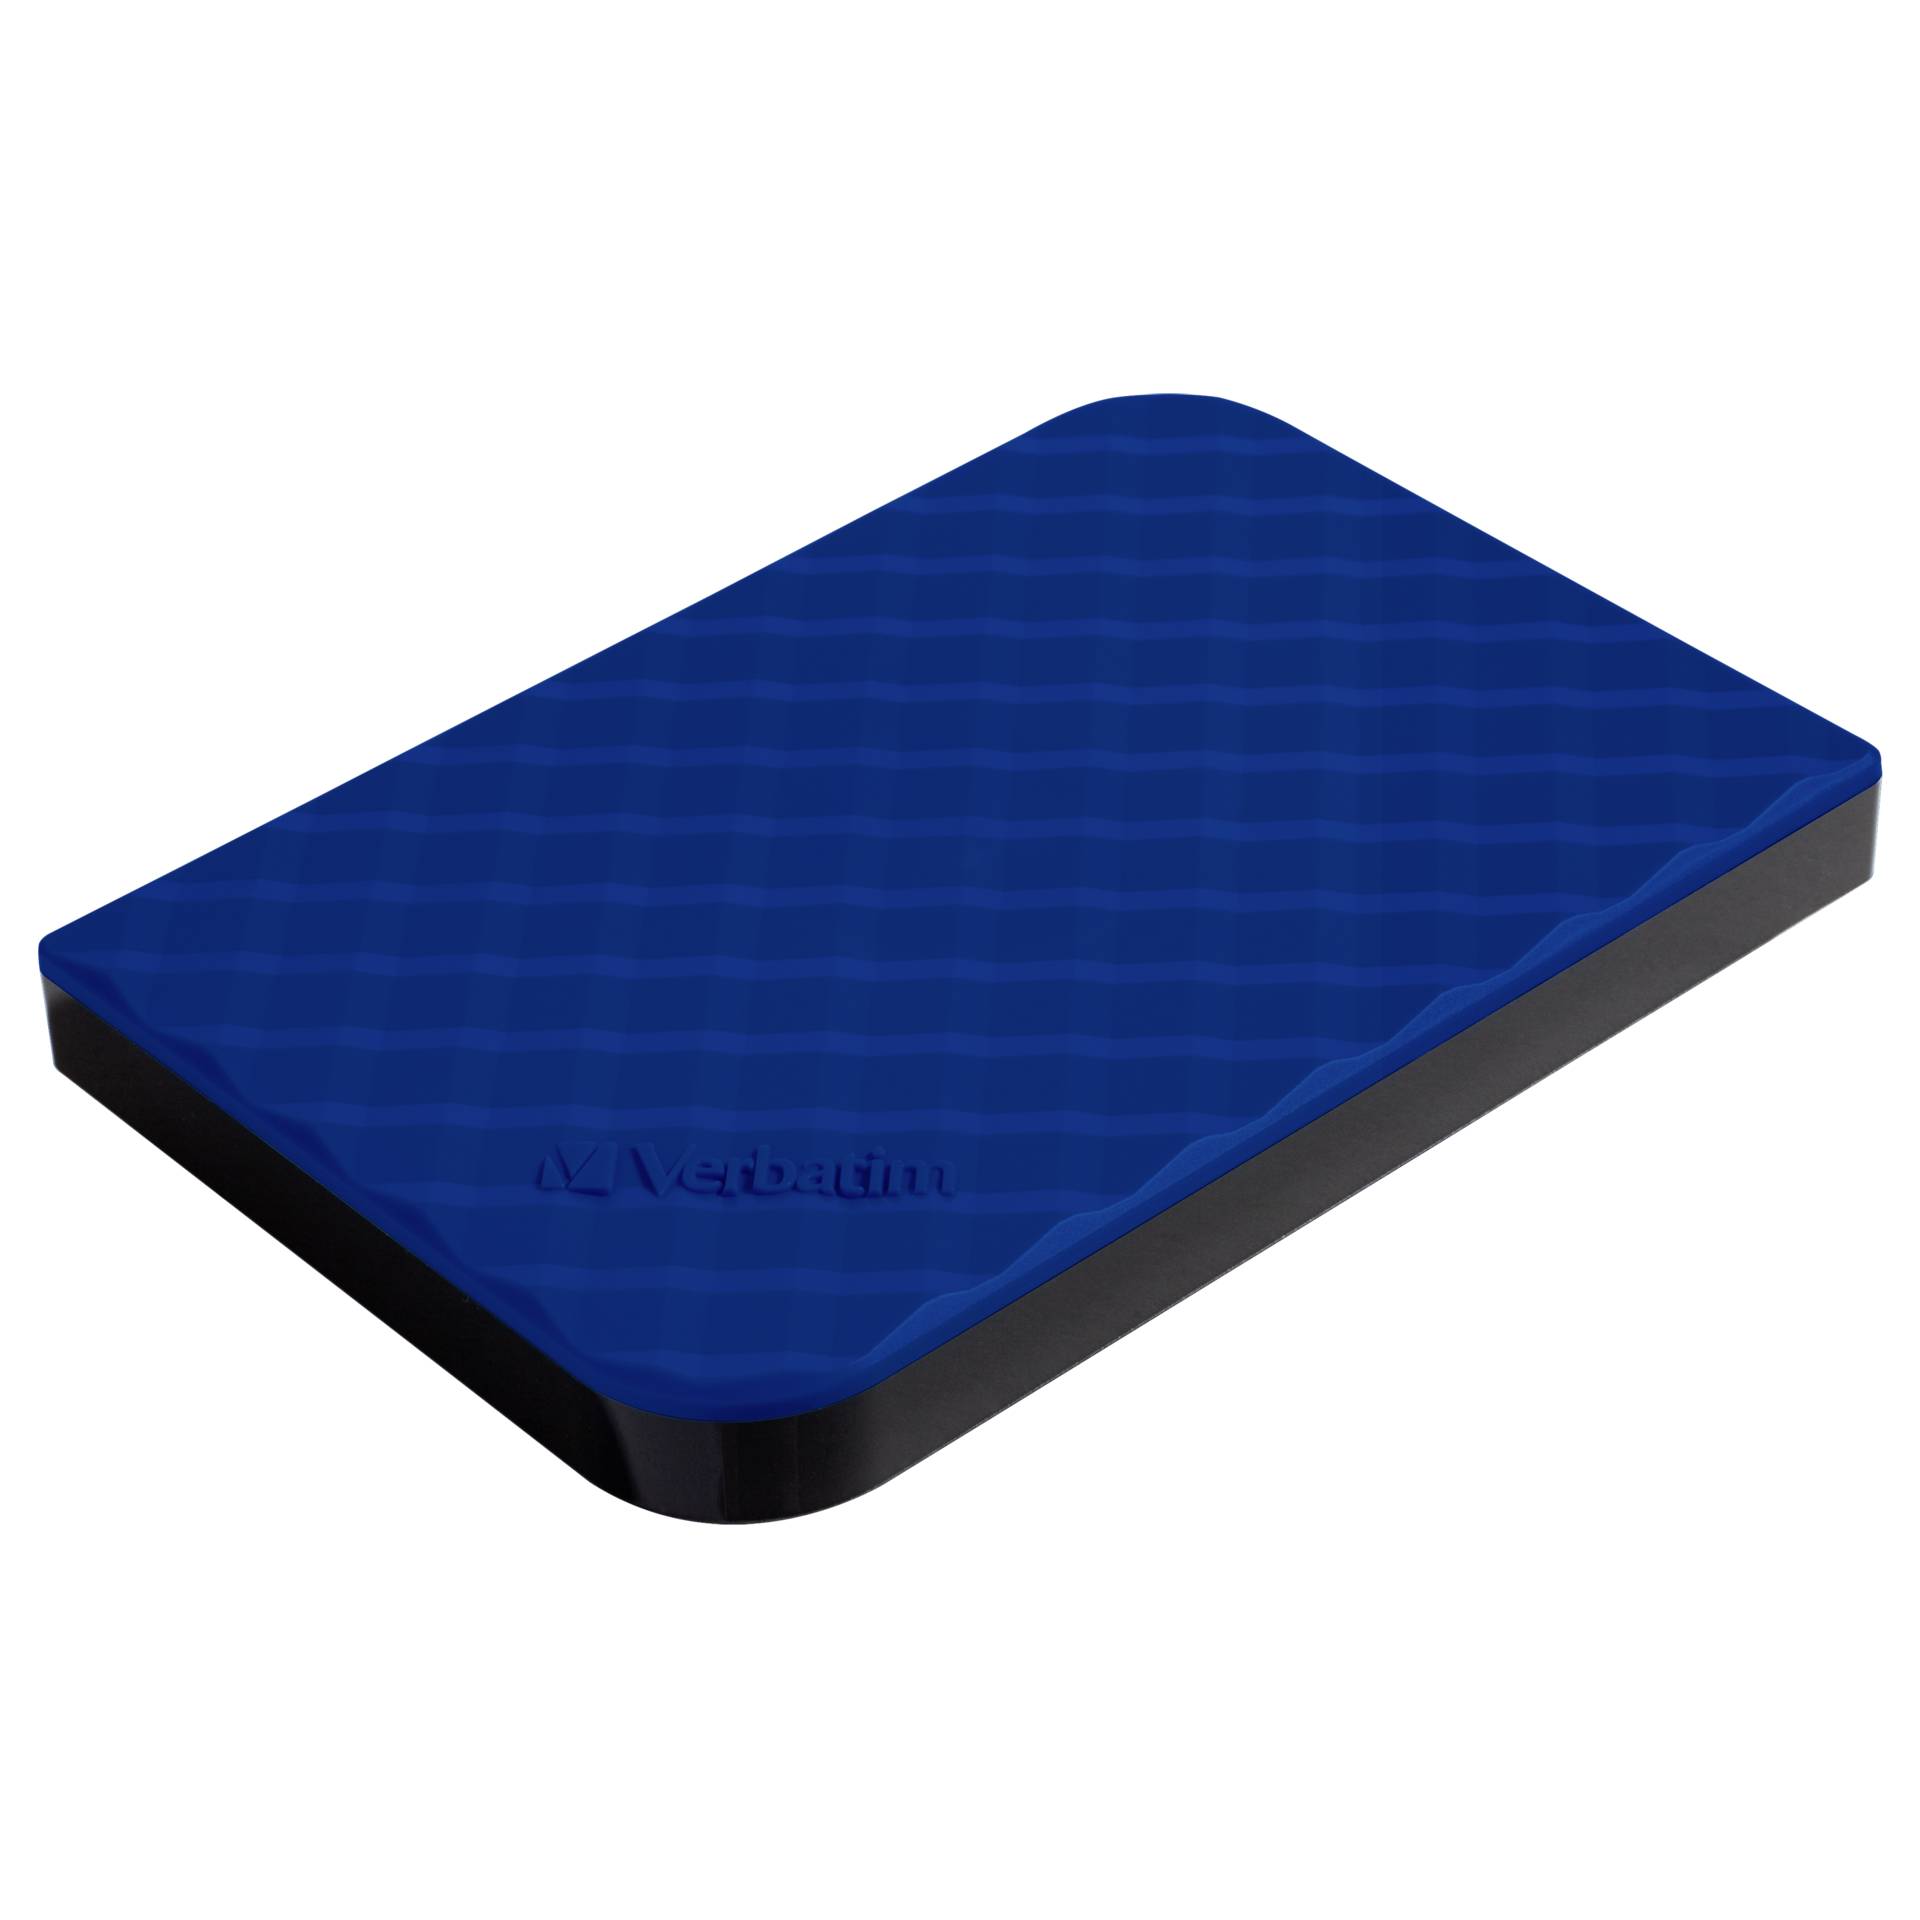 Verbatim Portables Festplattenlaufwerk Store n Go USB 3.0, 1 TB - Blau